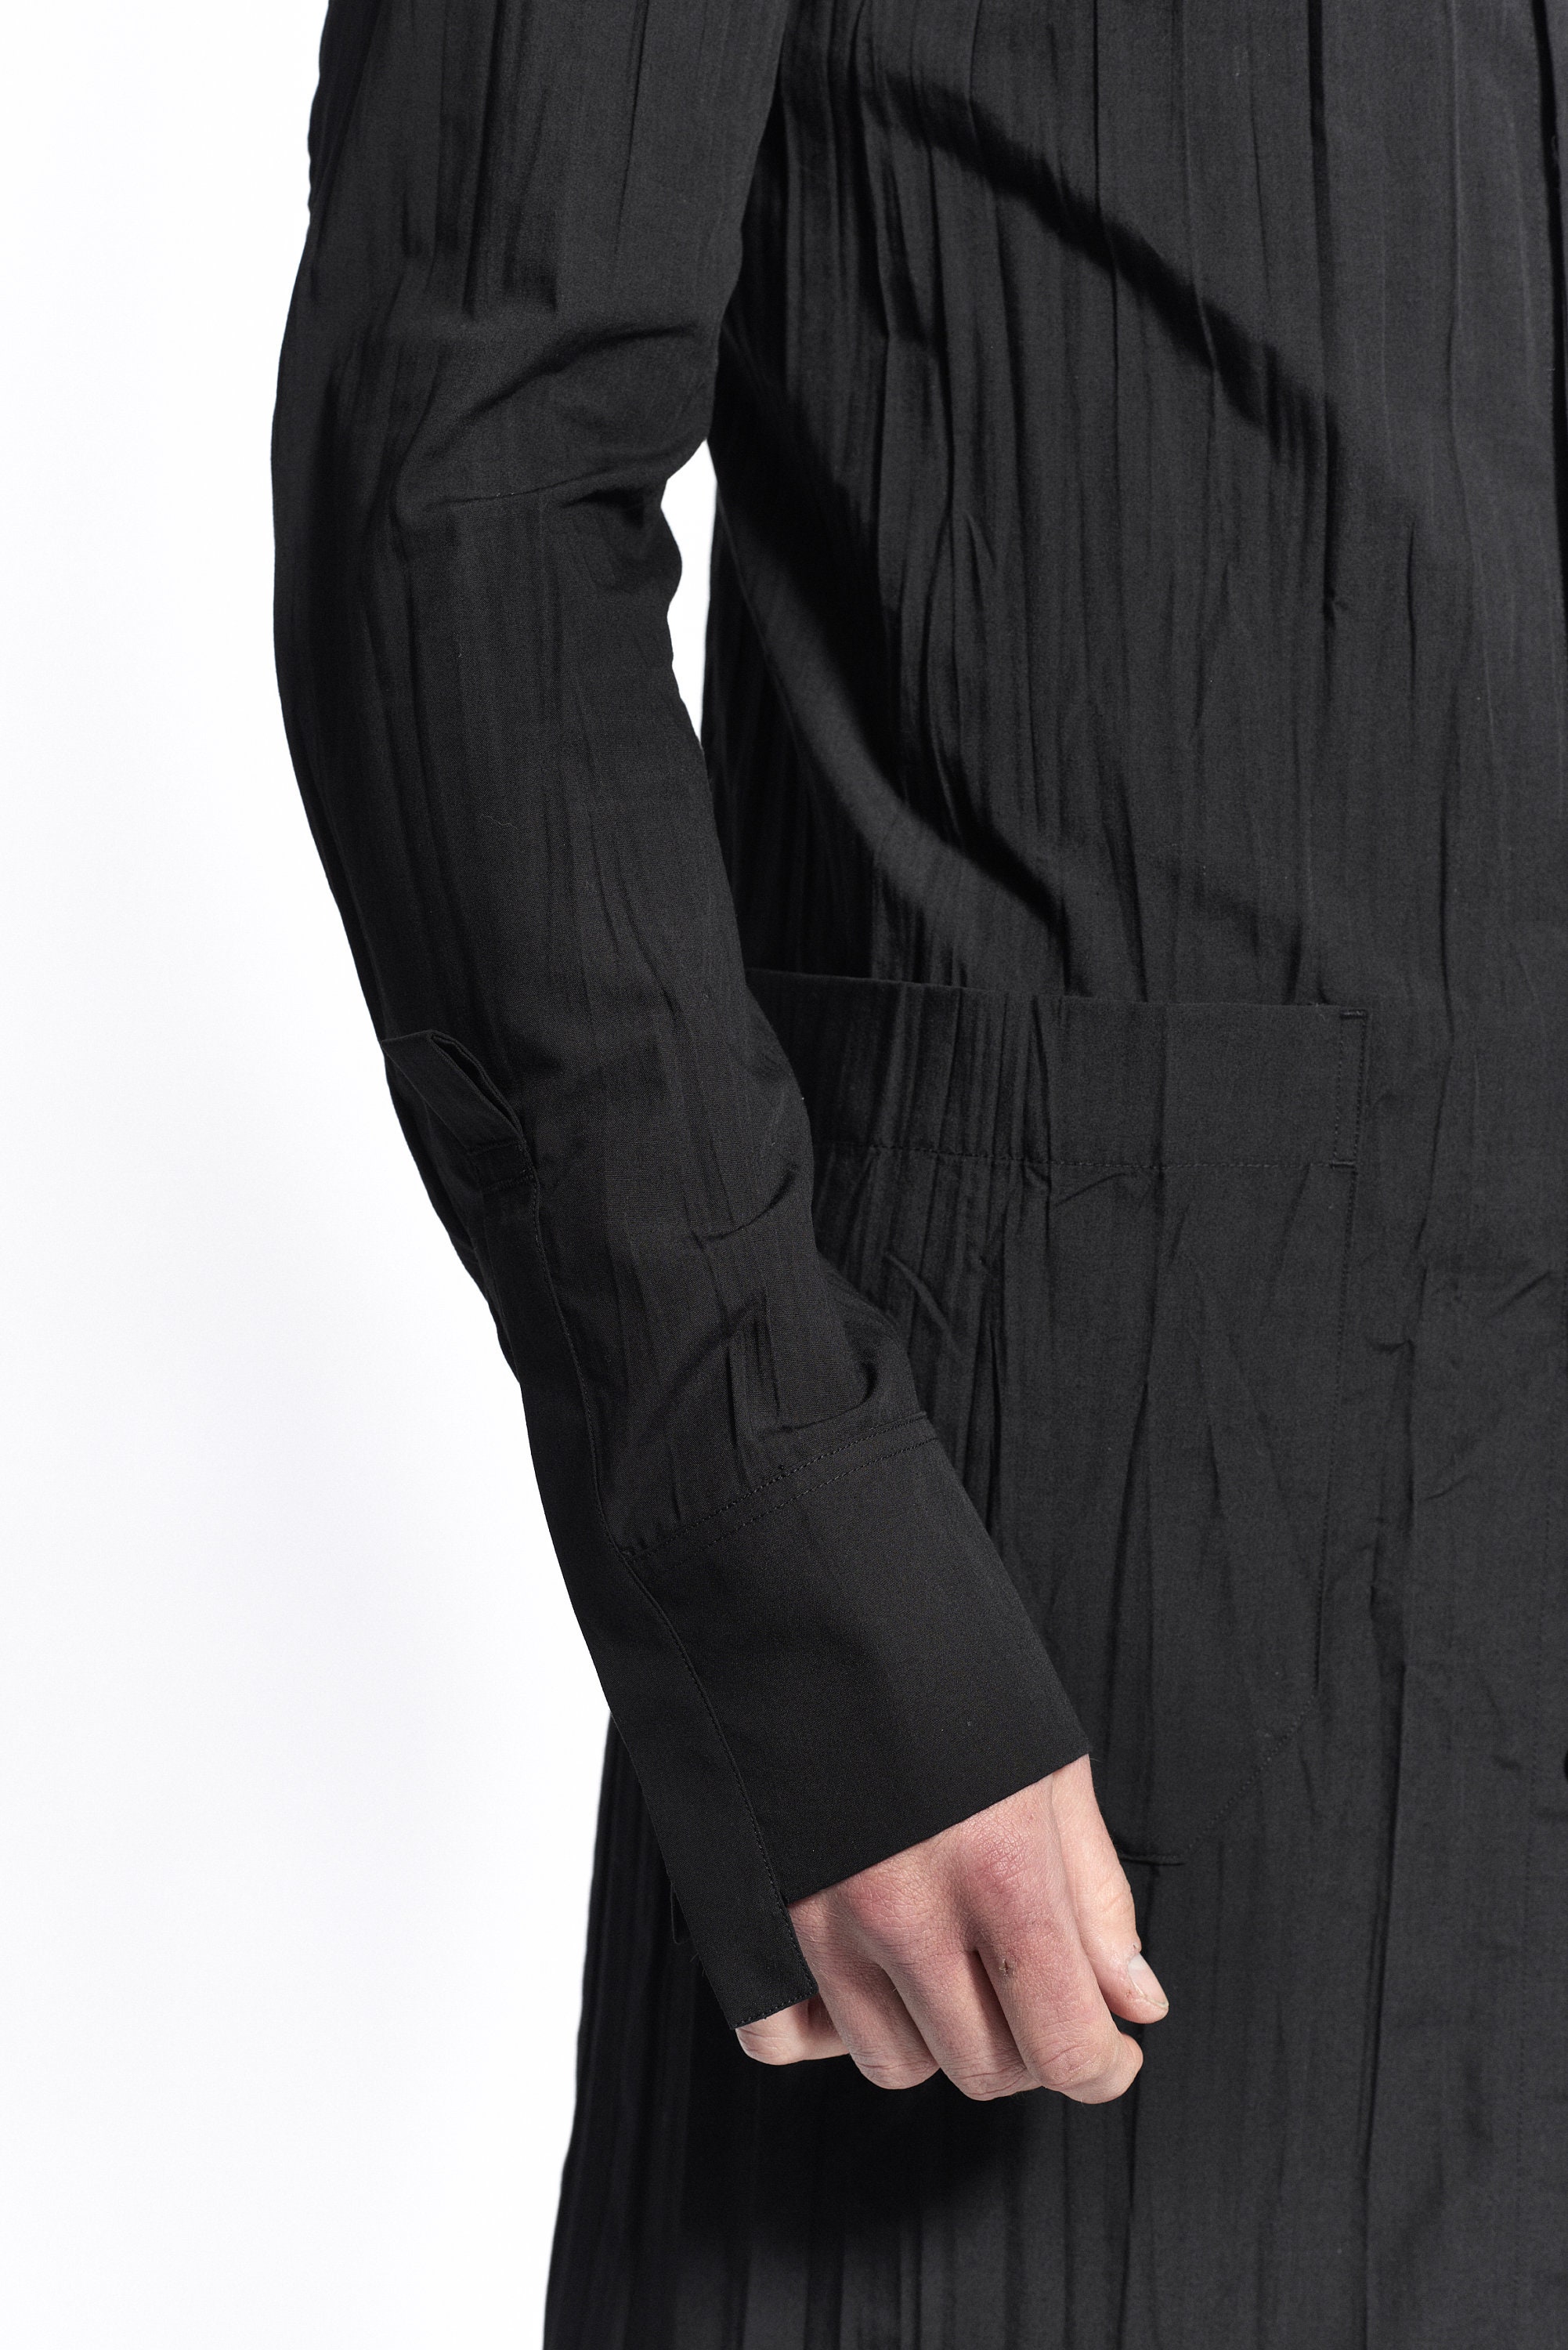 Long Sleeved Black Shirt / Elongated Cotton Shirt/ Futuristic - Etsy